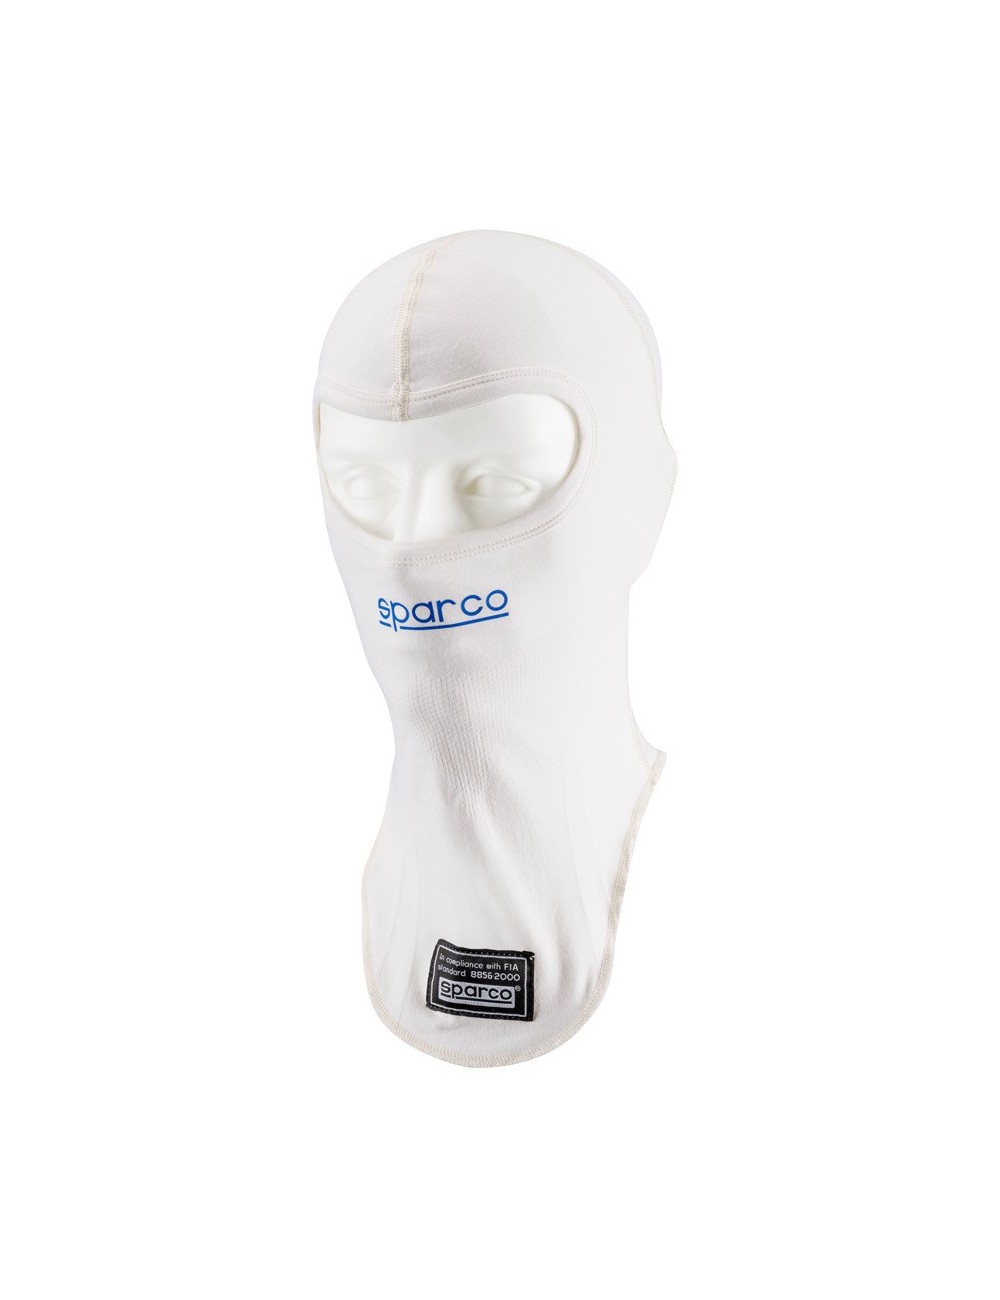 Nomex cagoule SPARCO Soft Touch  FIA blanc